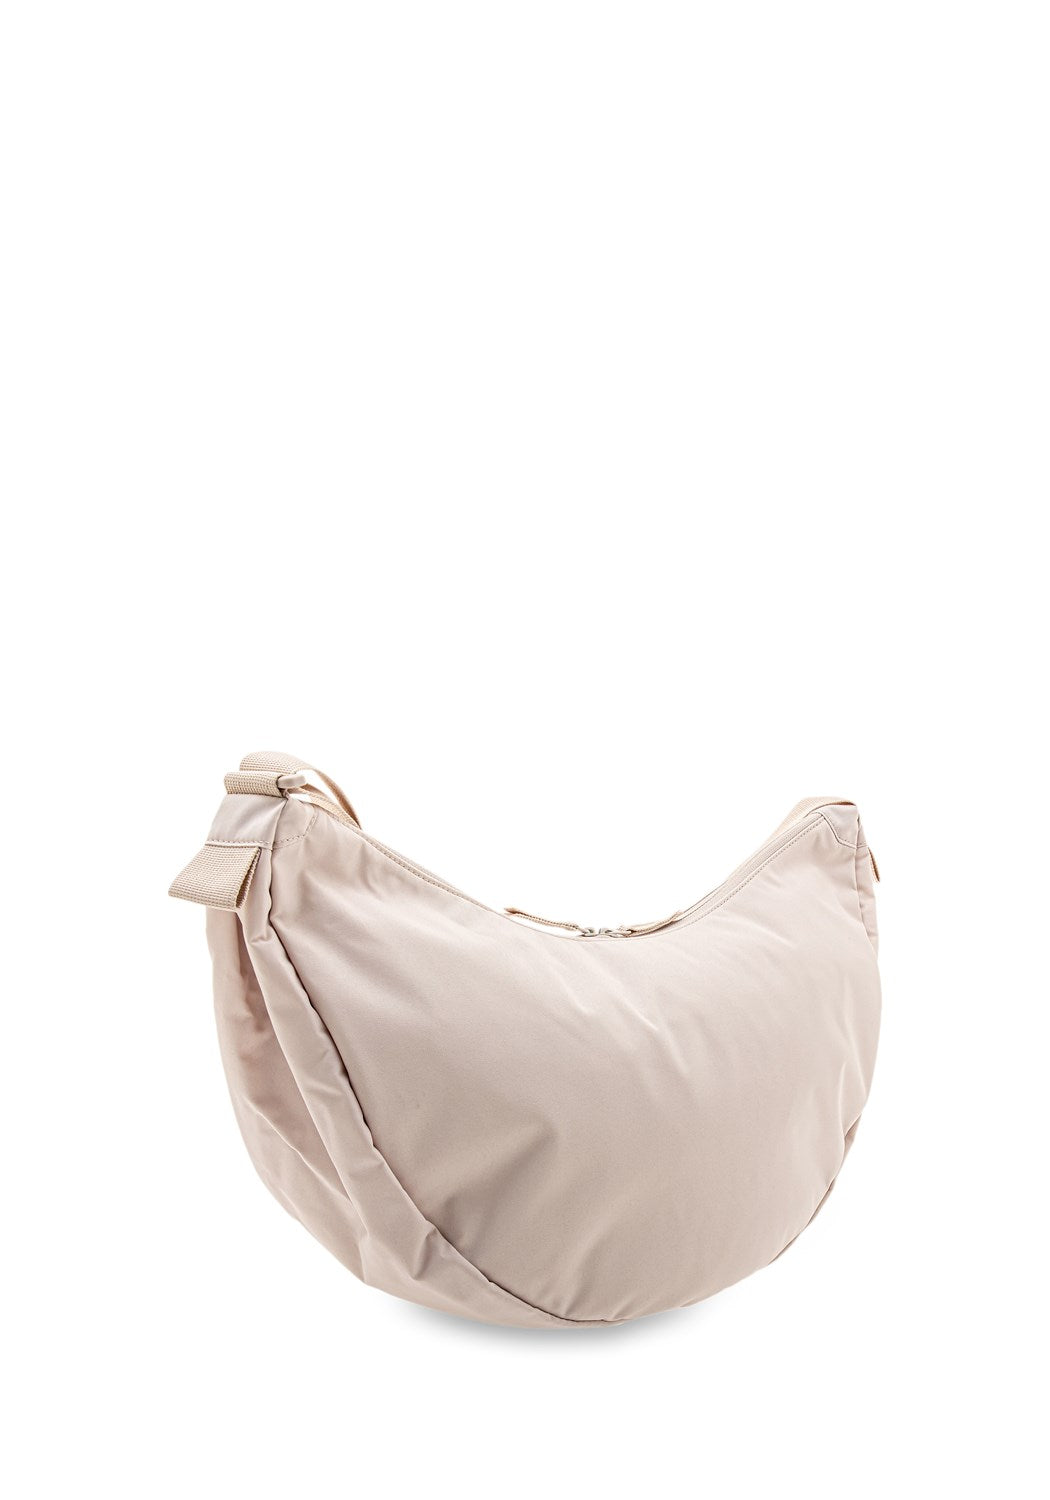 Moon Bag Large 300D  soft shell | Bildmaterial bereitgestellt von SHOES.PLEASE.